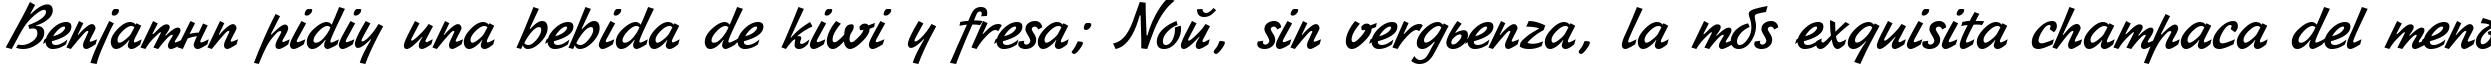 Пример написания шрифтом Present текста на испанском